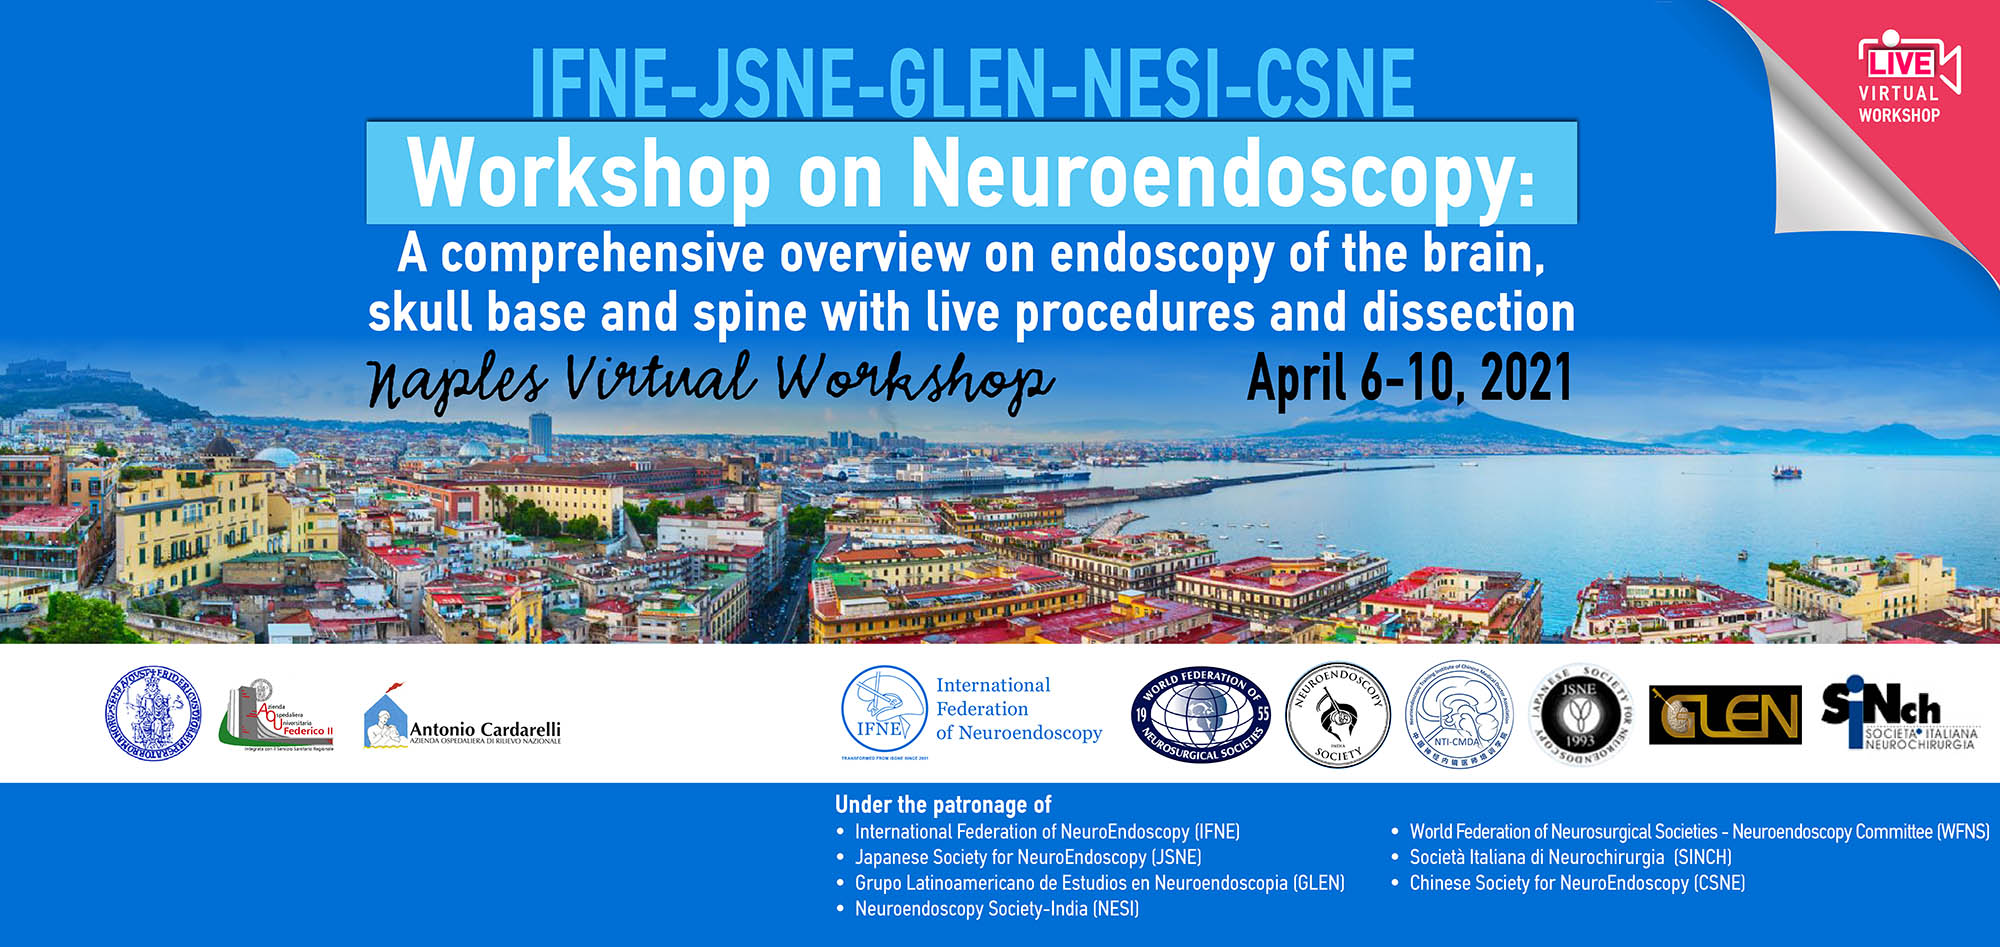 IFNE-JSNE-GLEN-NESI-CSNE Workshop on Neuroendoscopy | Naples Virtual Workshop | April 6-10, 2021